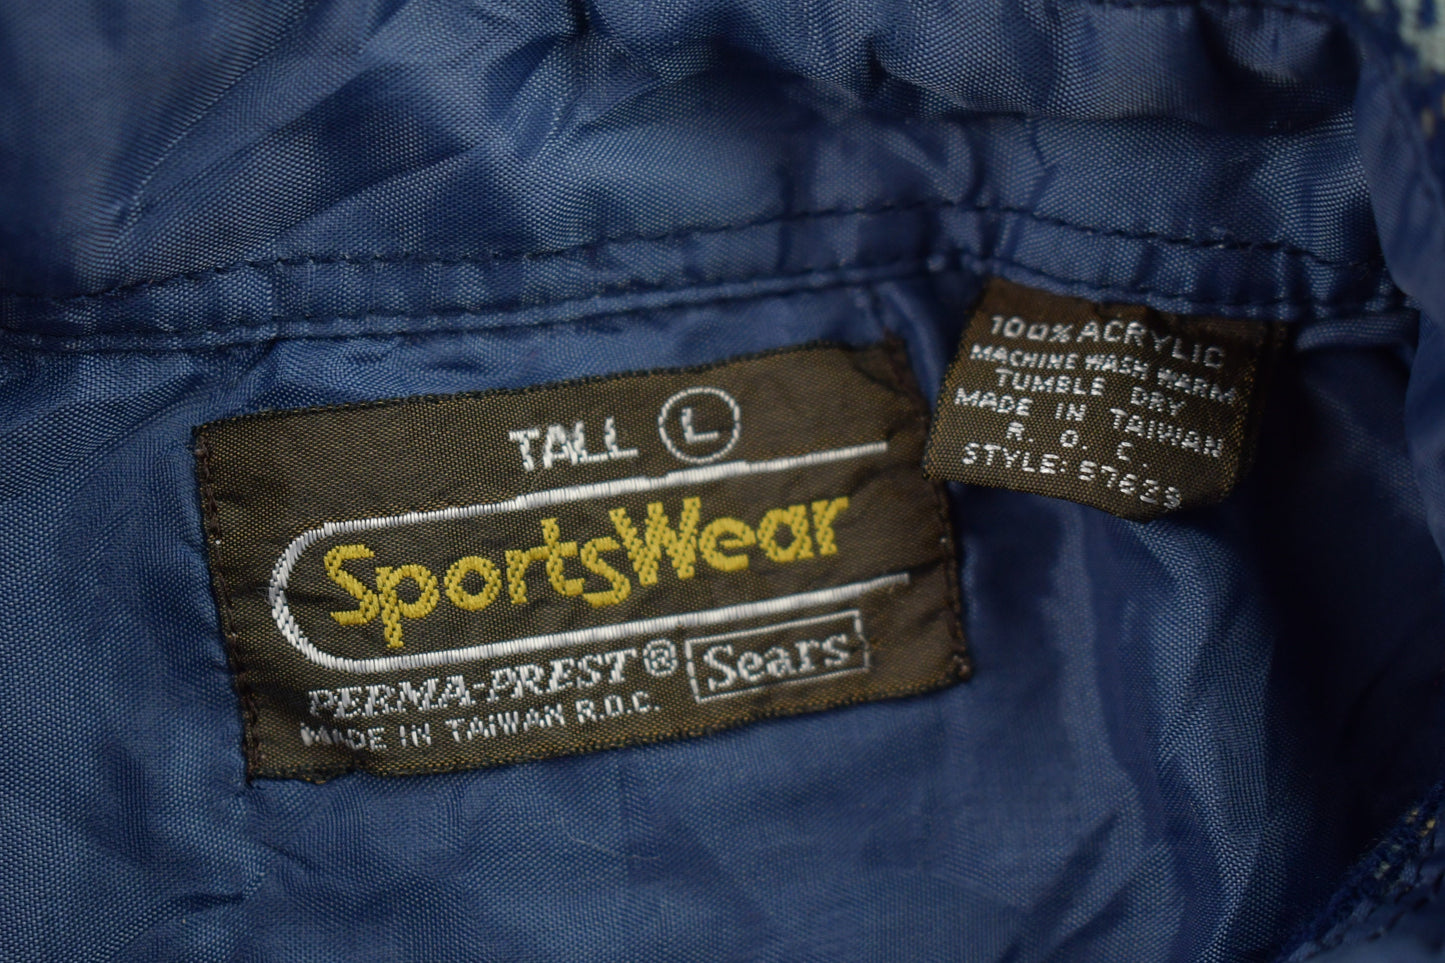 Vintage 1990s Sportswear Plaid Button Up Shirt / 1990s Button Up / Vintage Flannel / Casual Wear / Workwear / Pattern Button Up